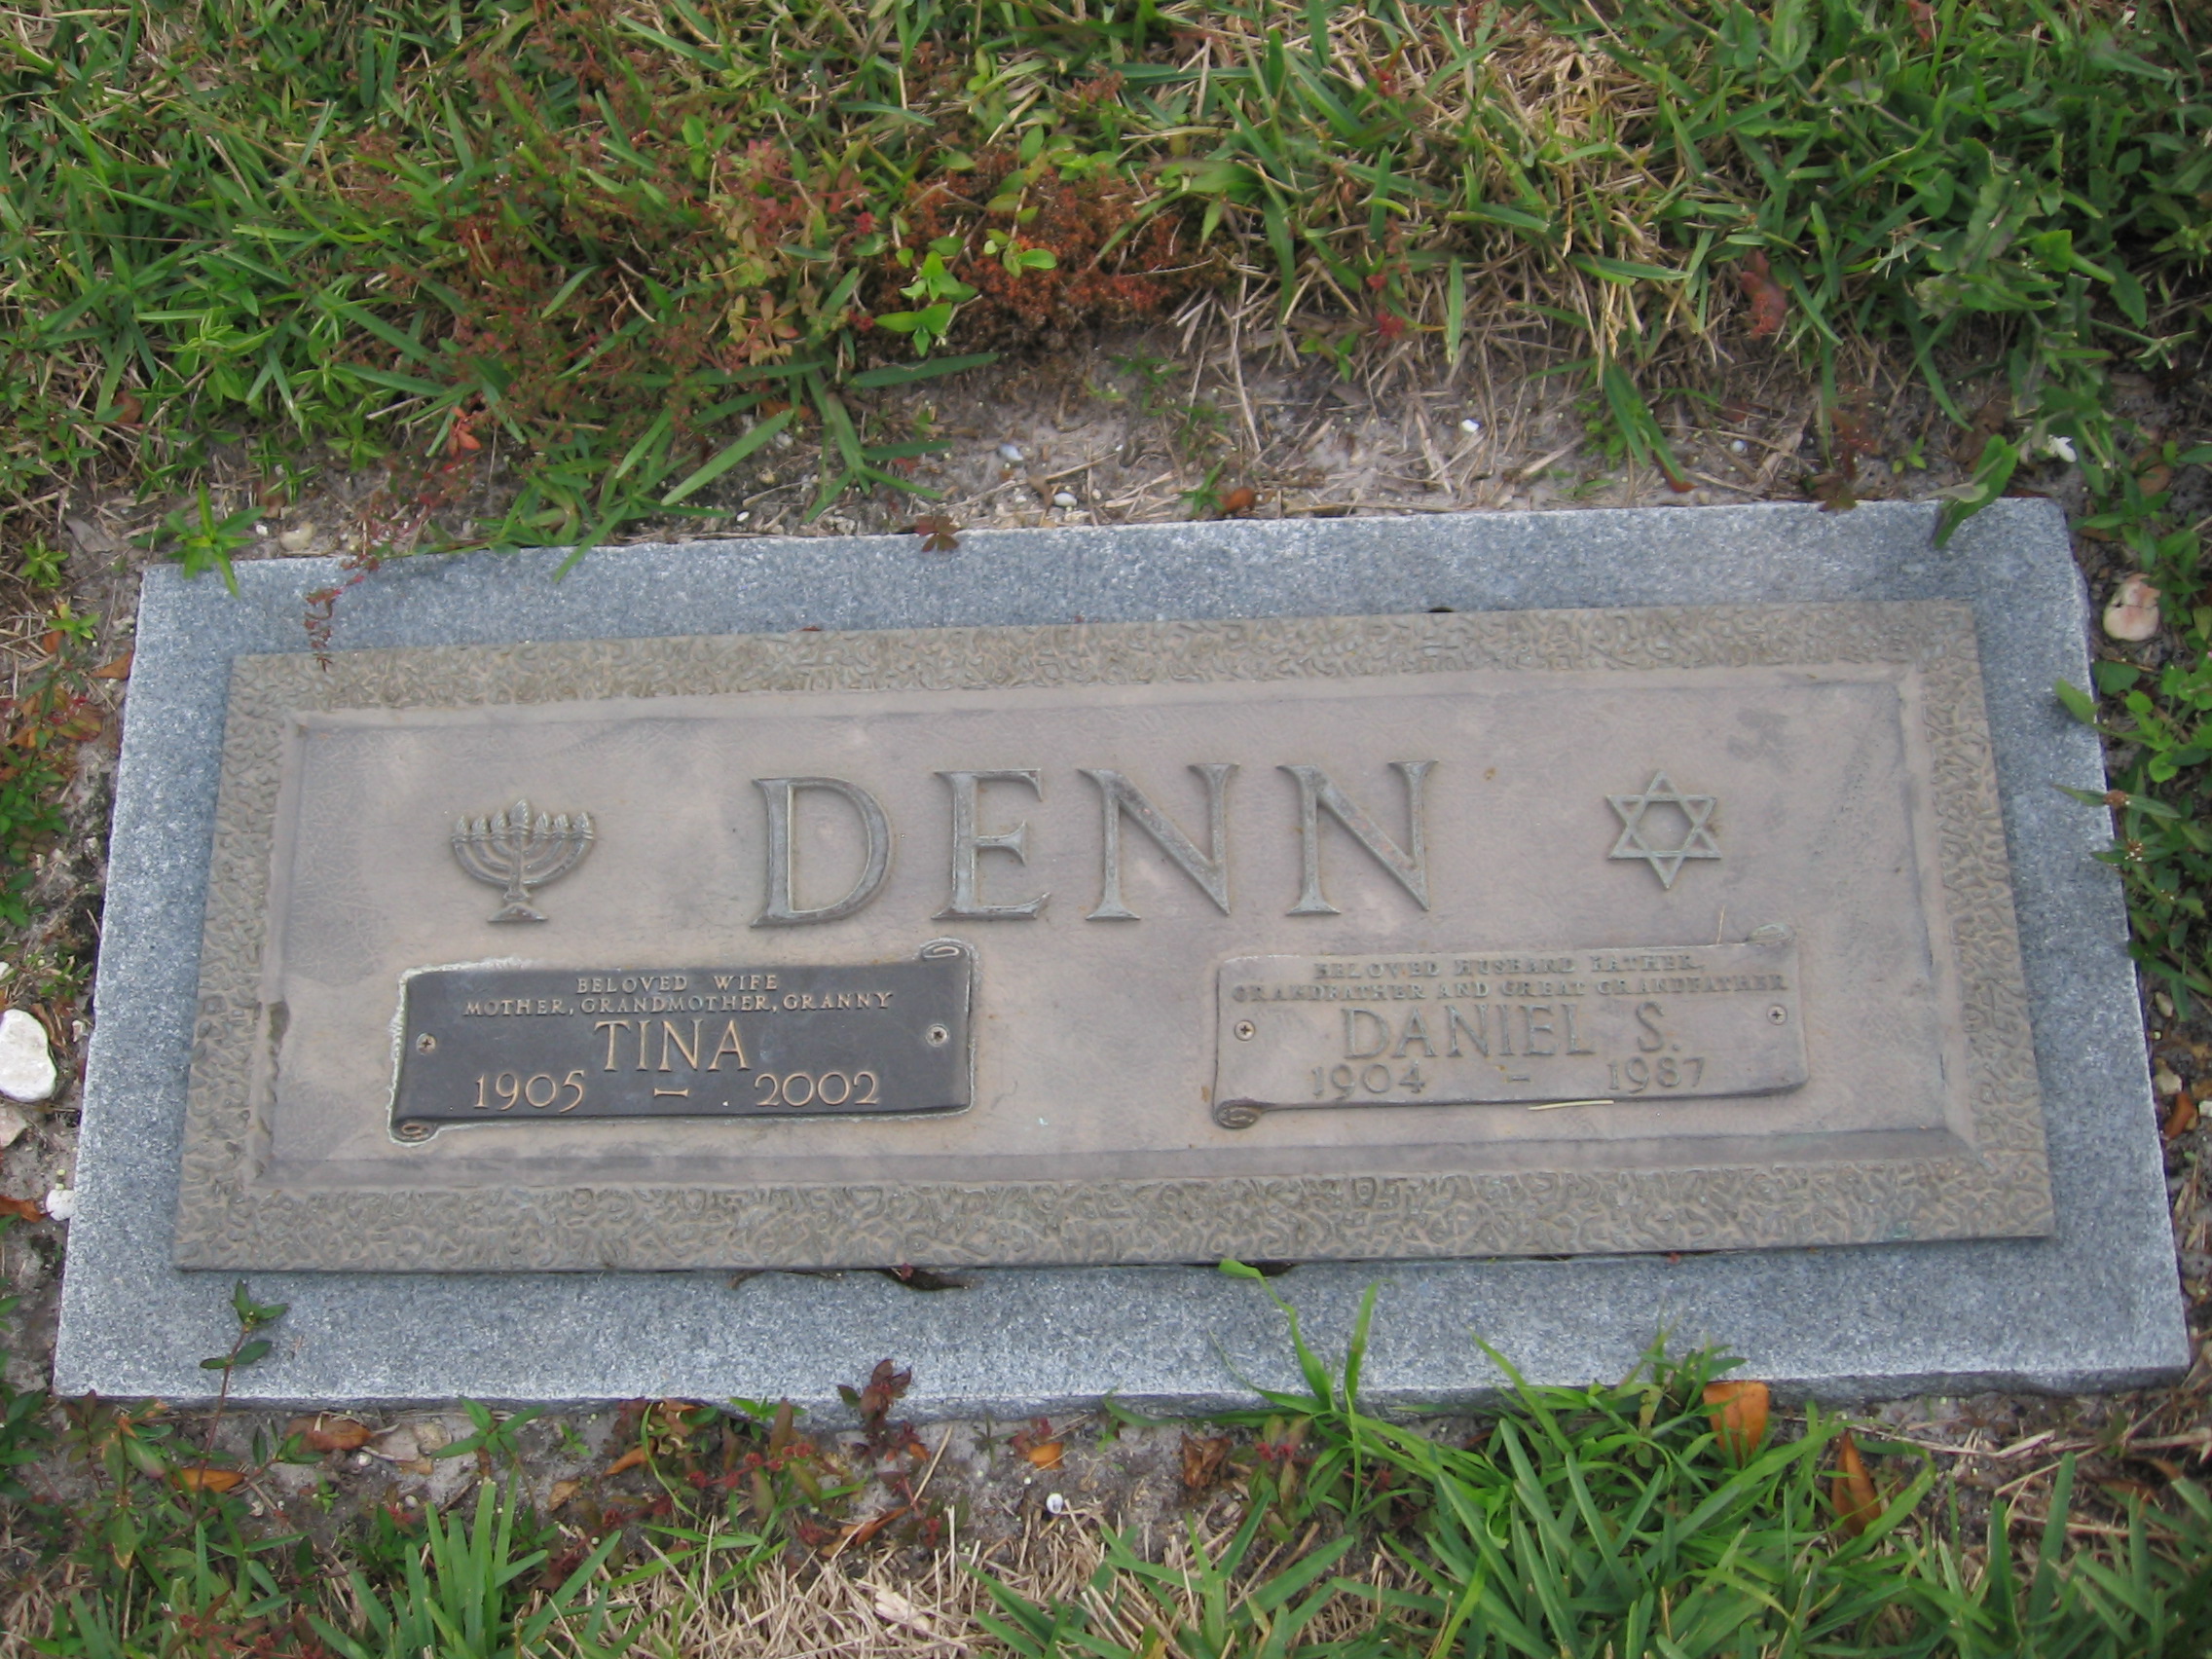 Daniel S Denn